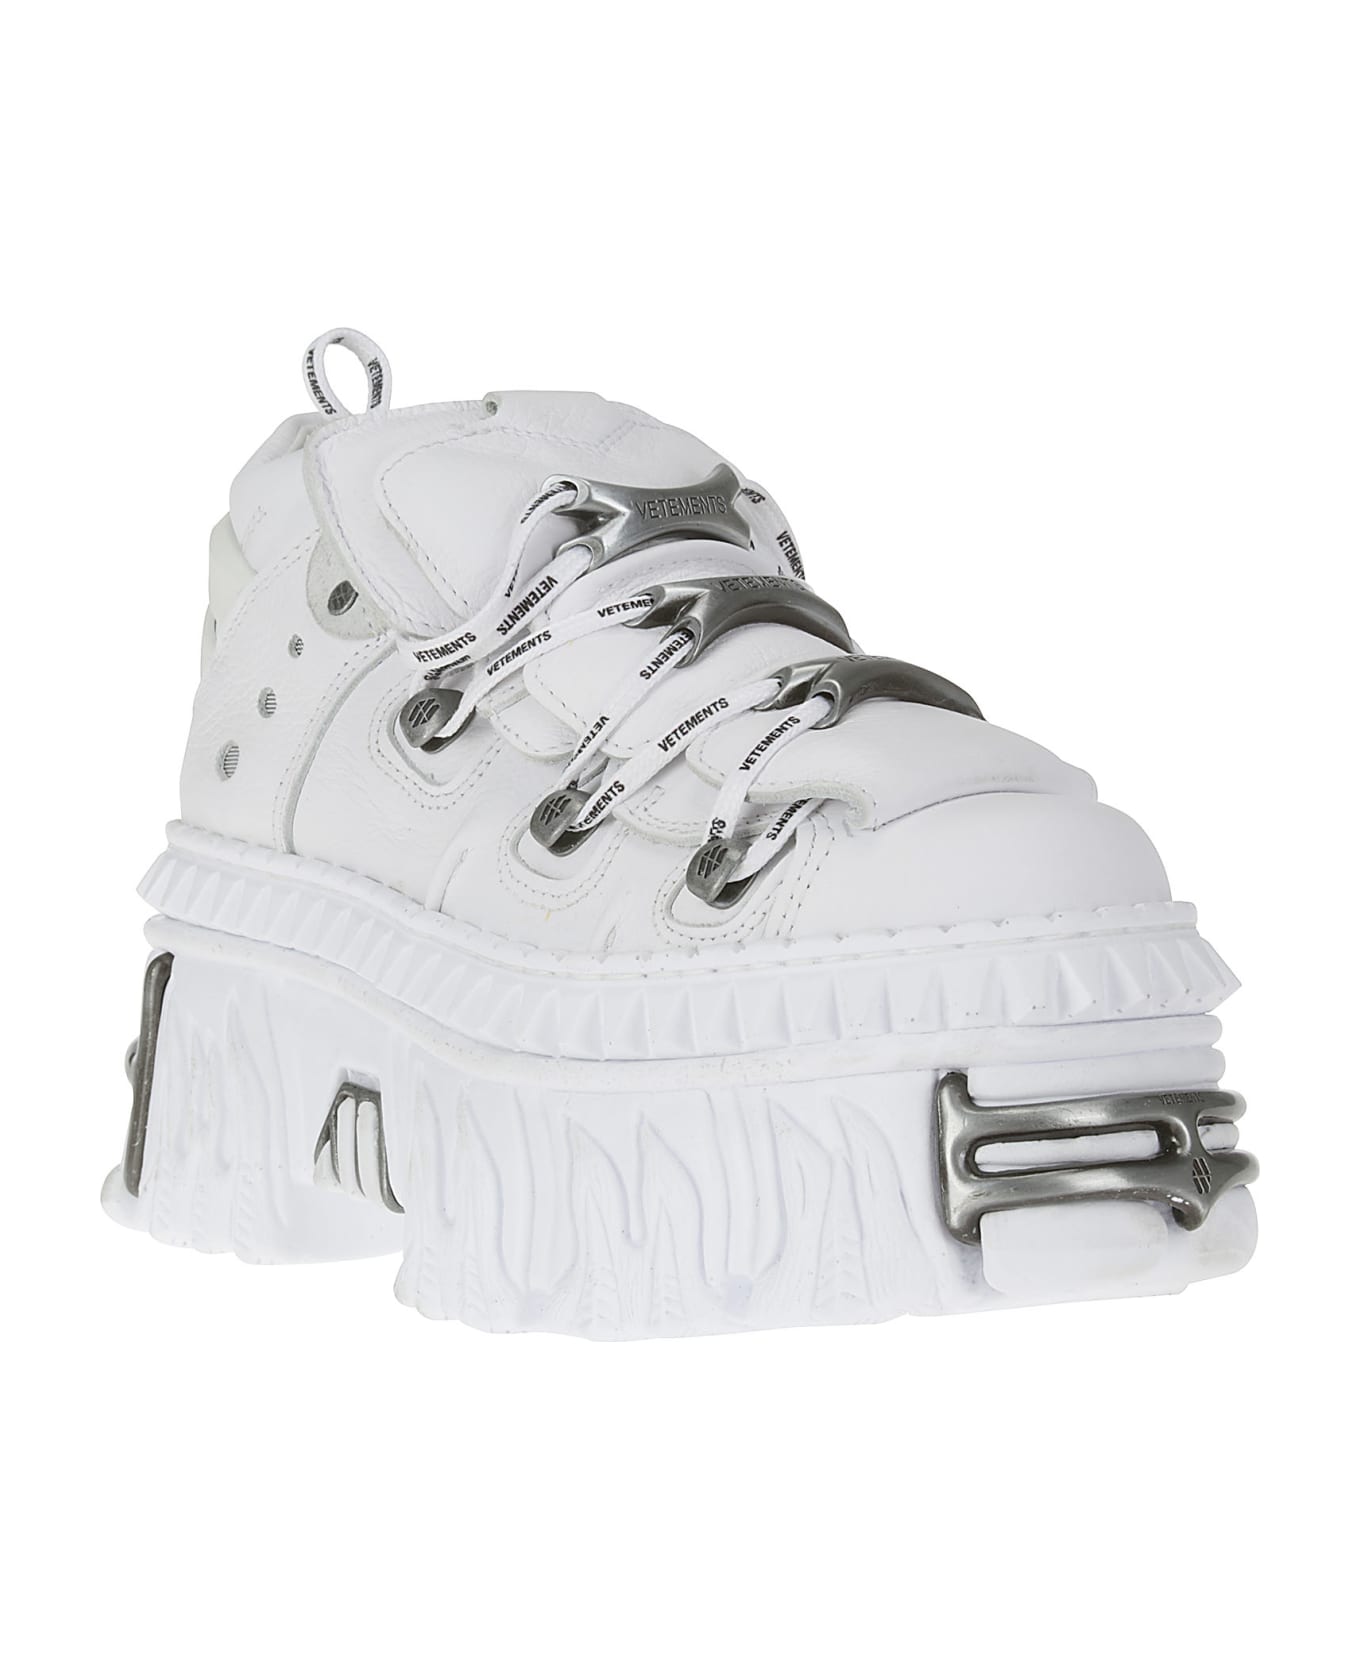 VETEMENTS xnewrock Platform Sneakers - WHITE